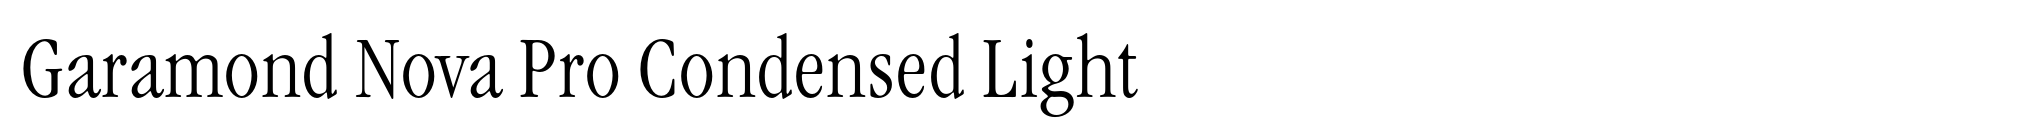 Garamond Nova Pro Condensed Light image